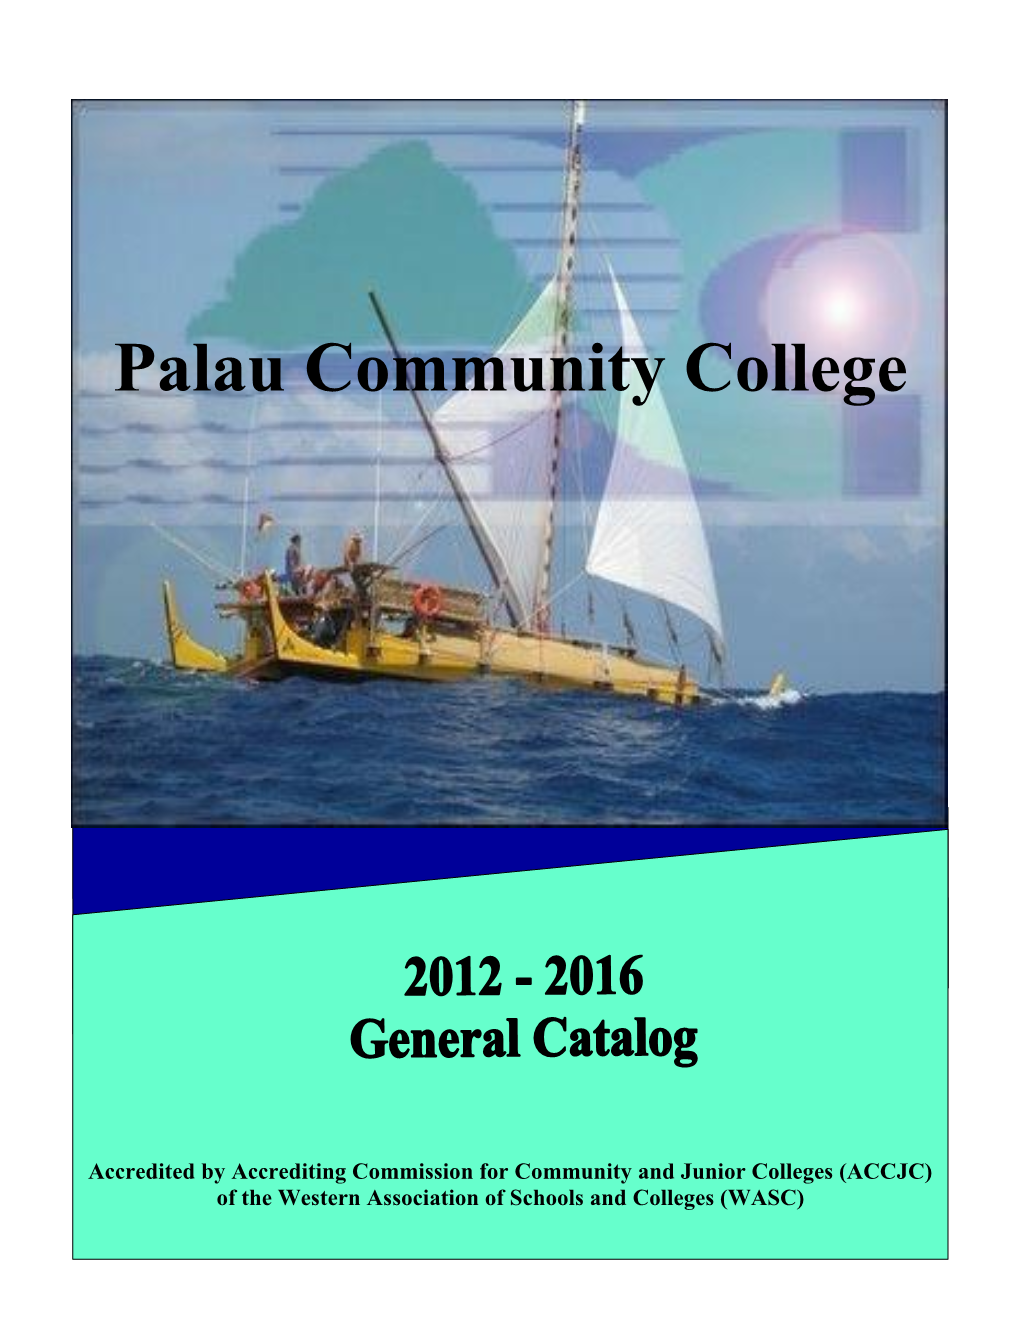 PCC General Catalog 2012